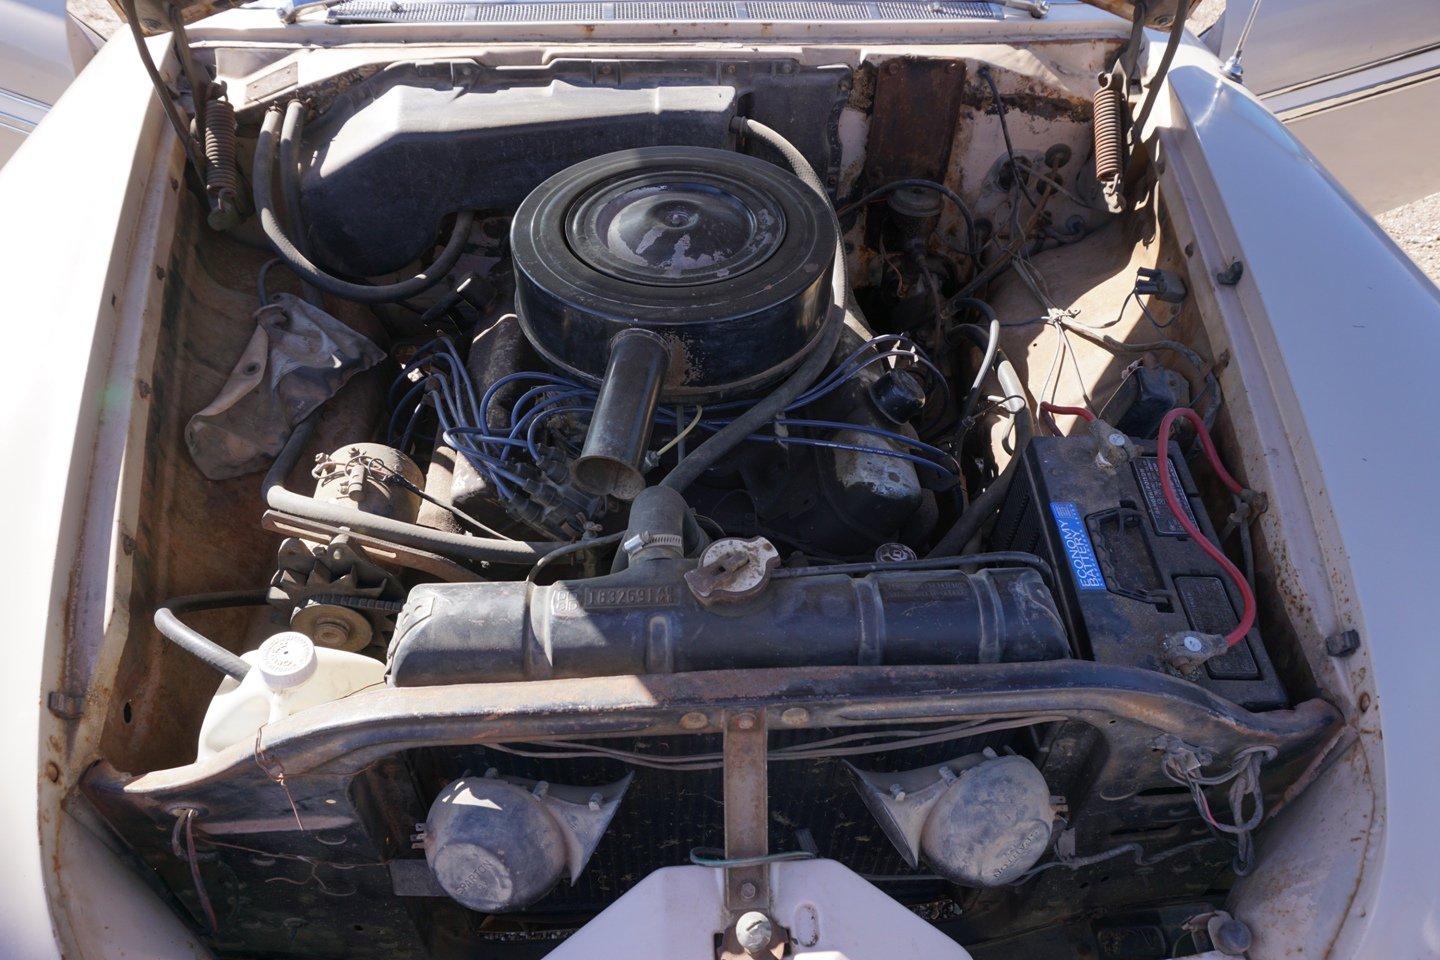 1959 Desoto 4-Door Sedan, V-8 Gas Engine, Automatic Transmission, Heat, No Air Conditioning, 23,343 